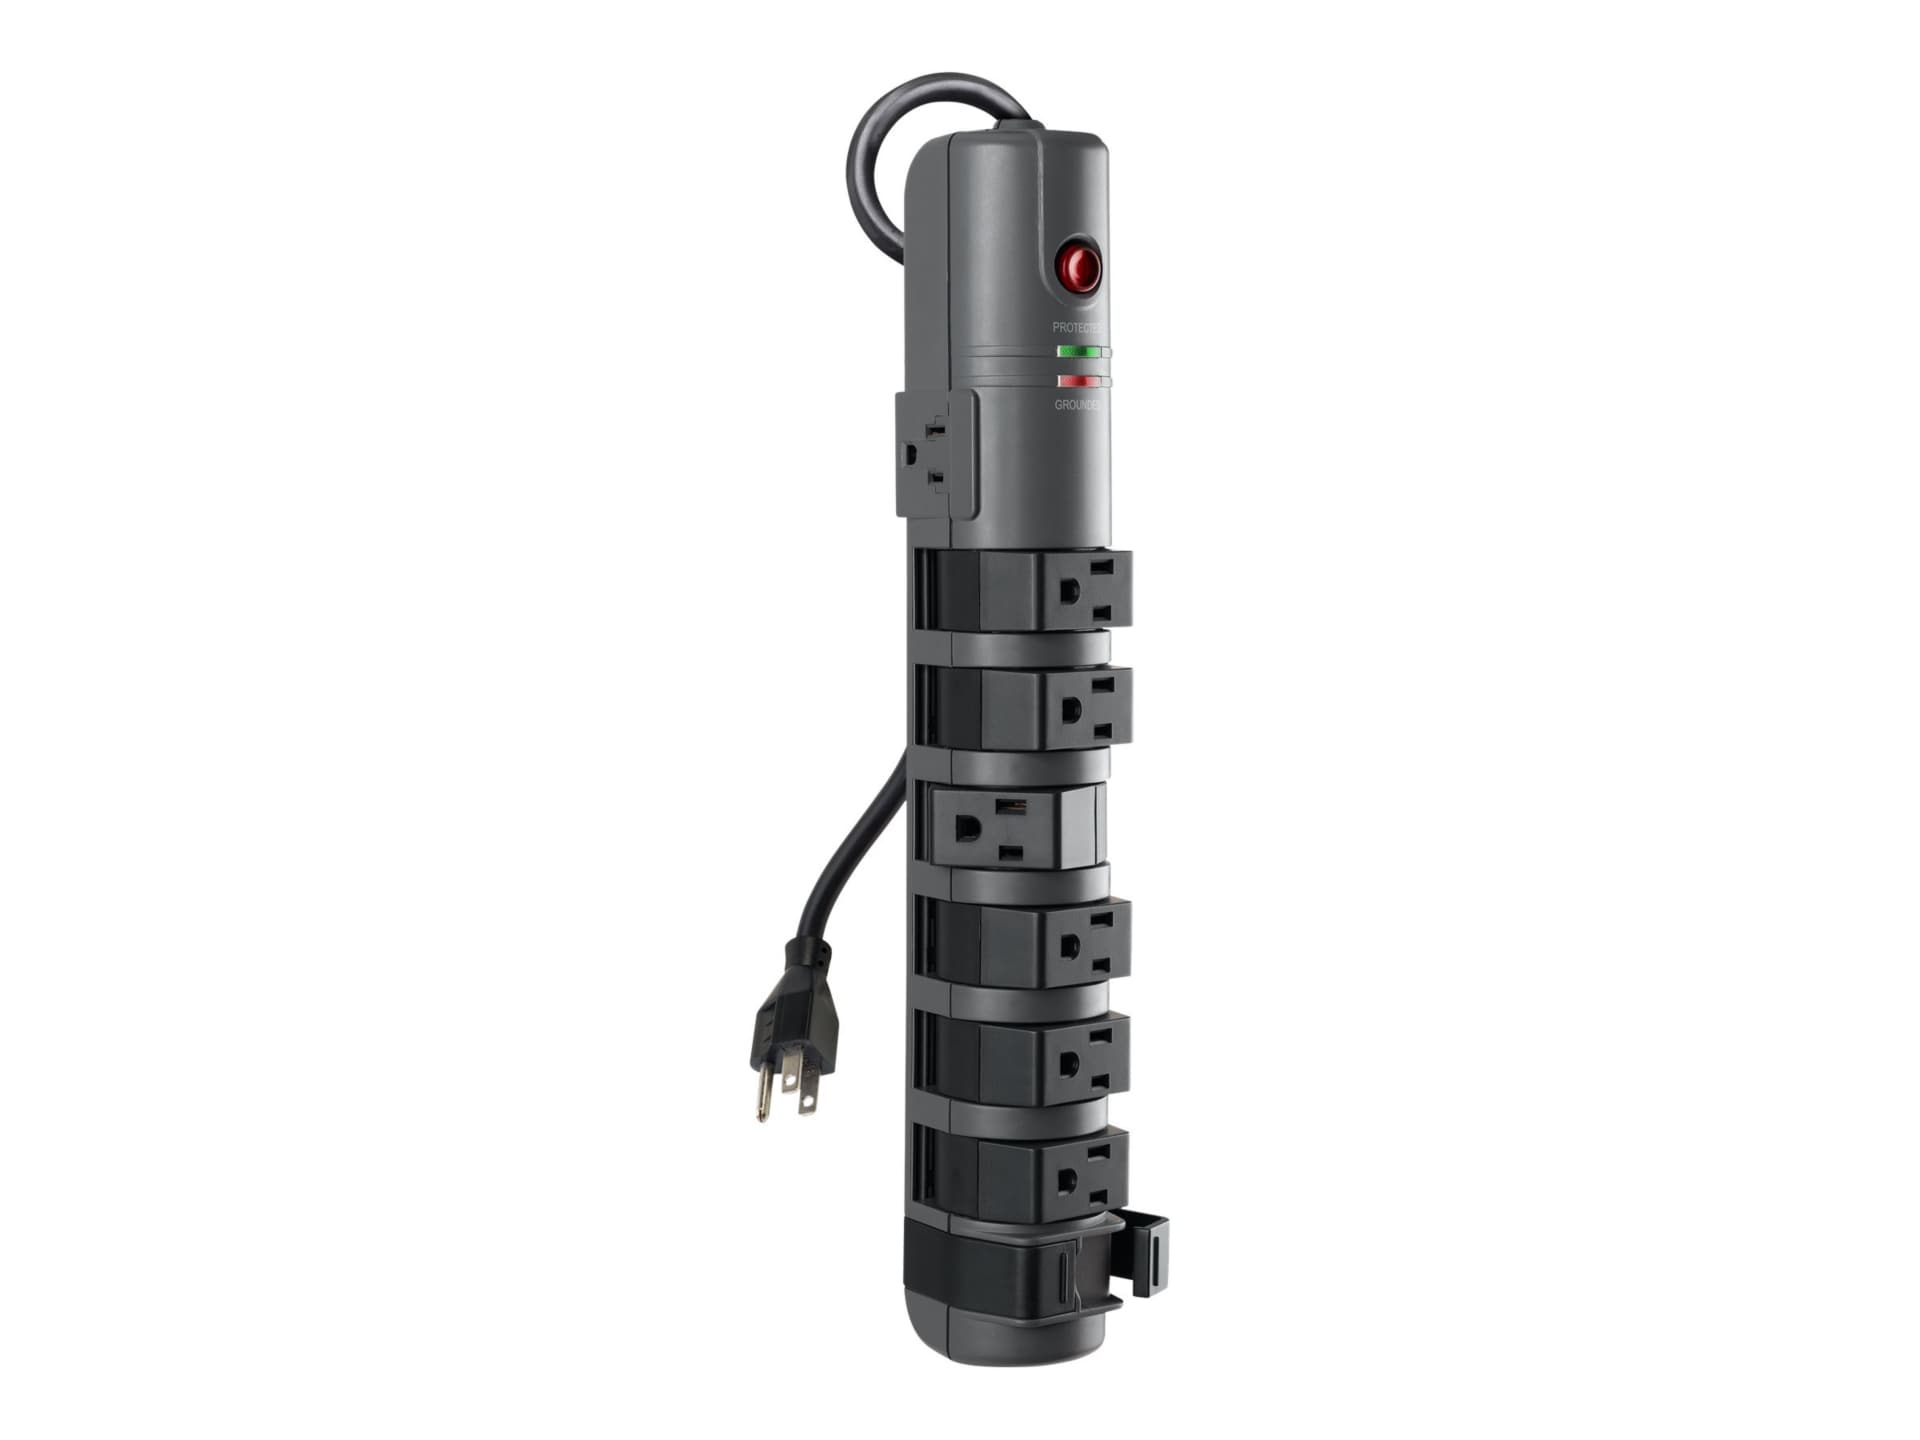 Belkin Pivot Plug Surge Protector - surge protector